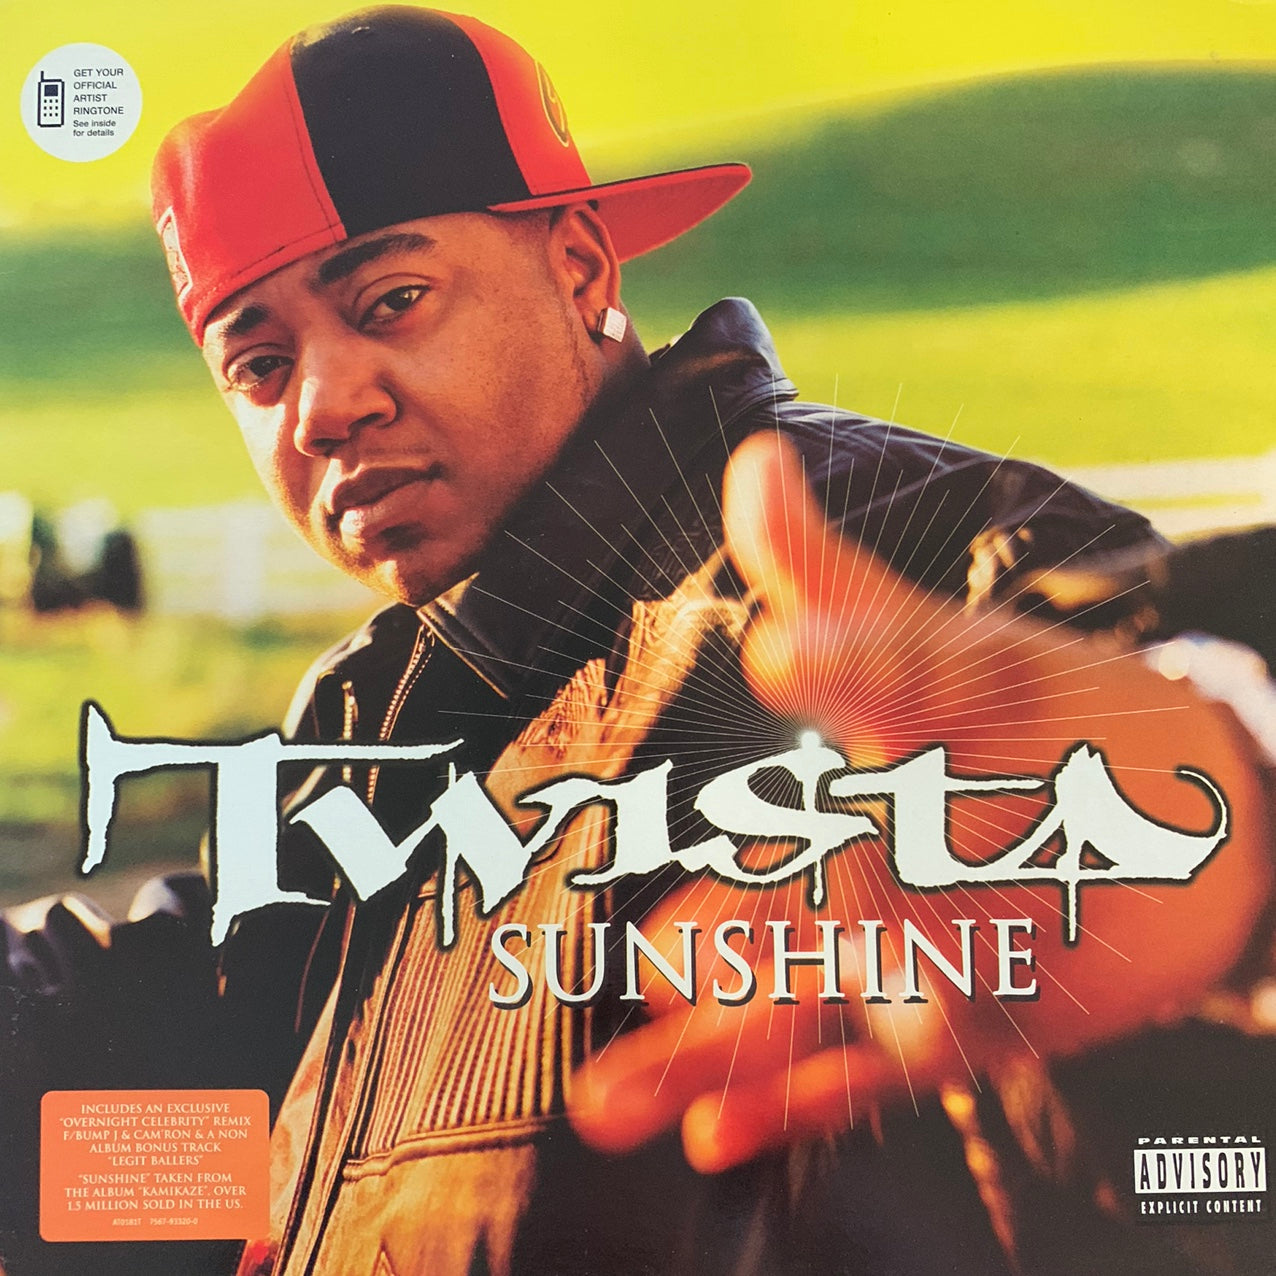 Twista “Sunshine” / “Overnight Celebrity” 4 Track 12inch Vinyl